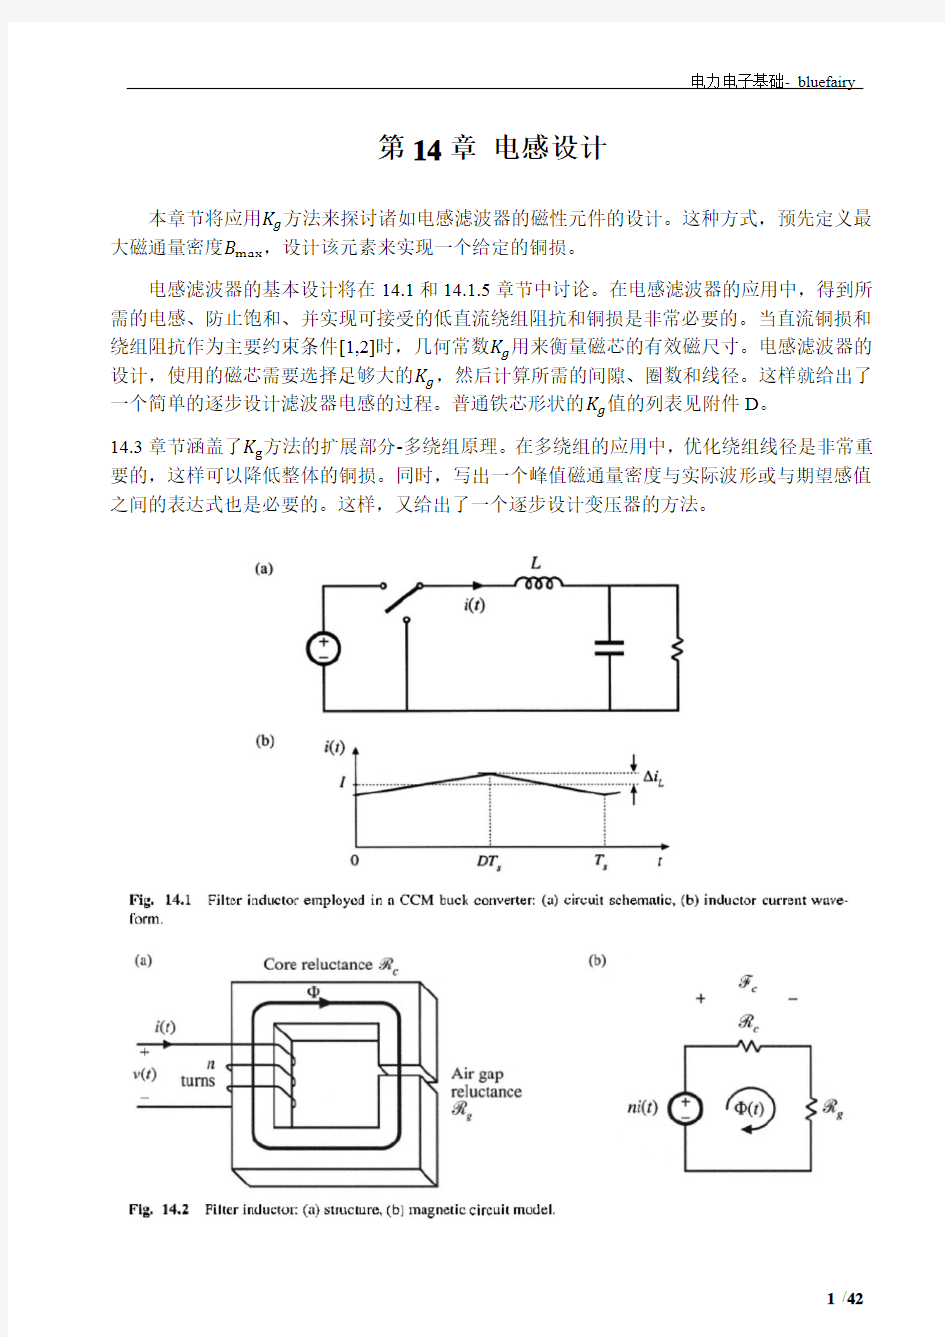 Fundamentals of Power Electronics Kg法设计变压器